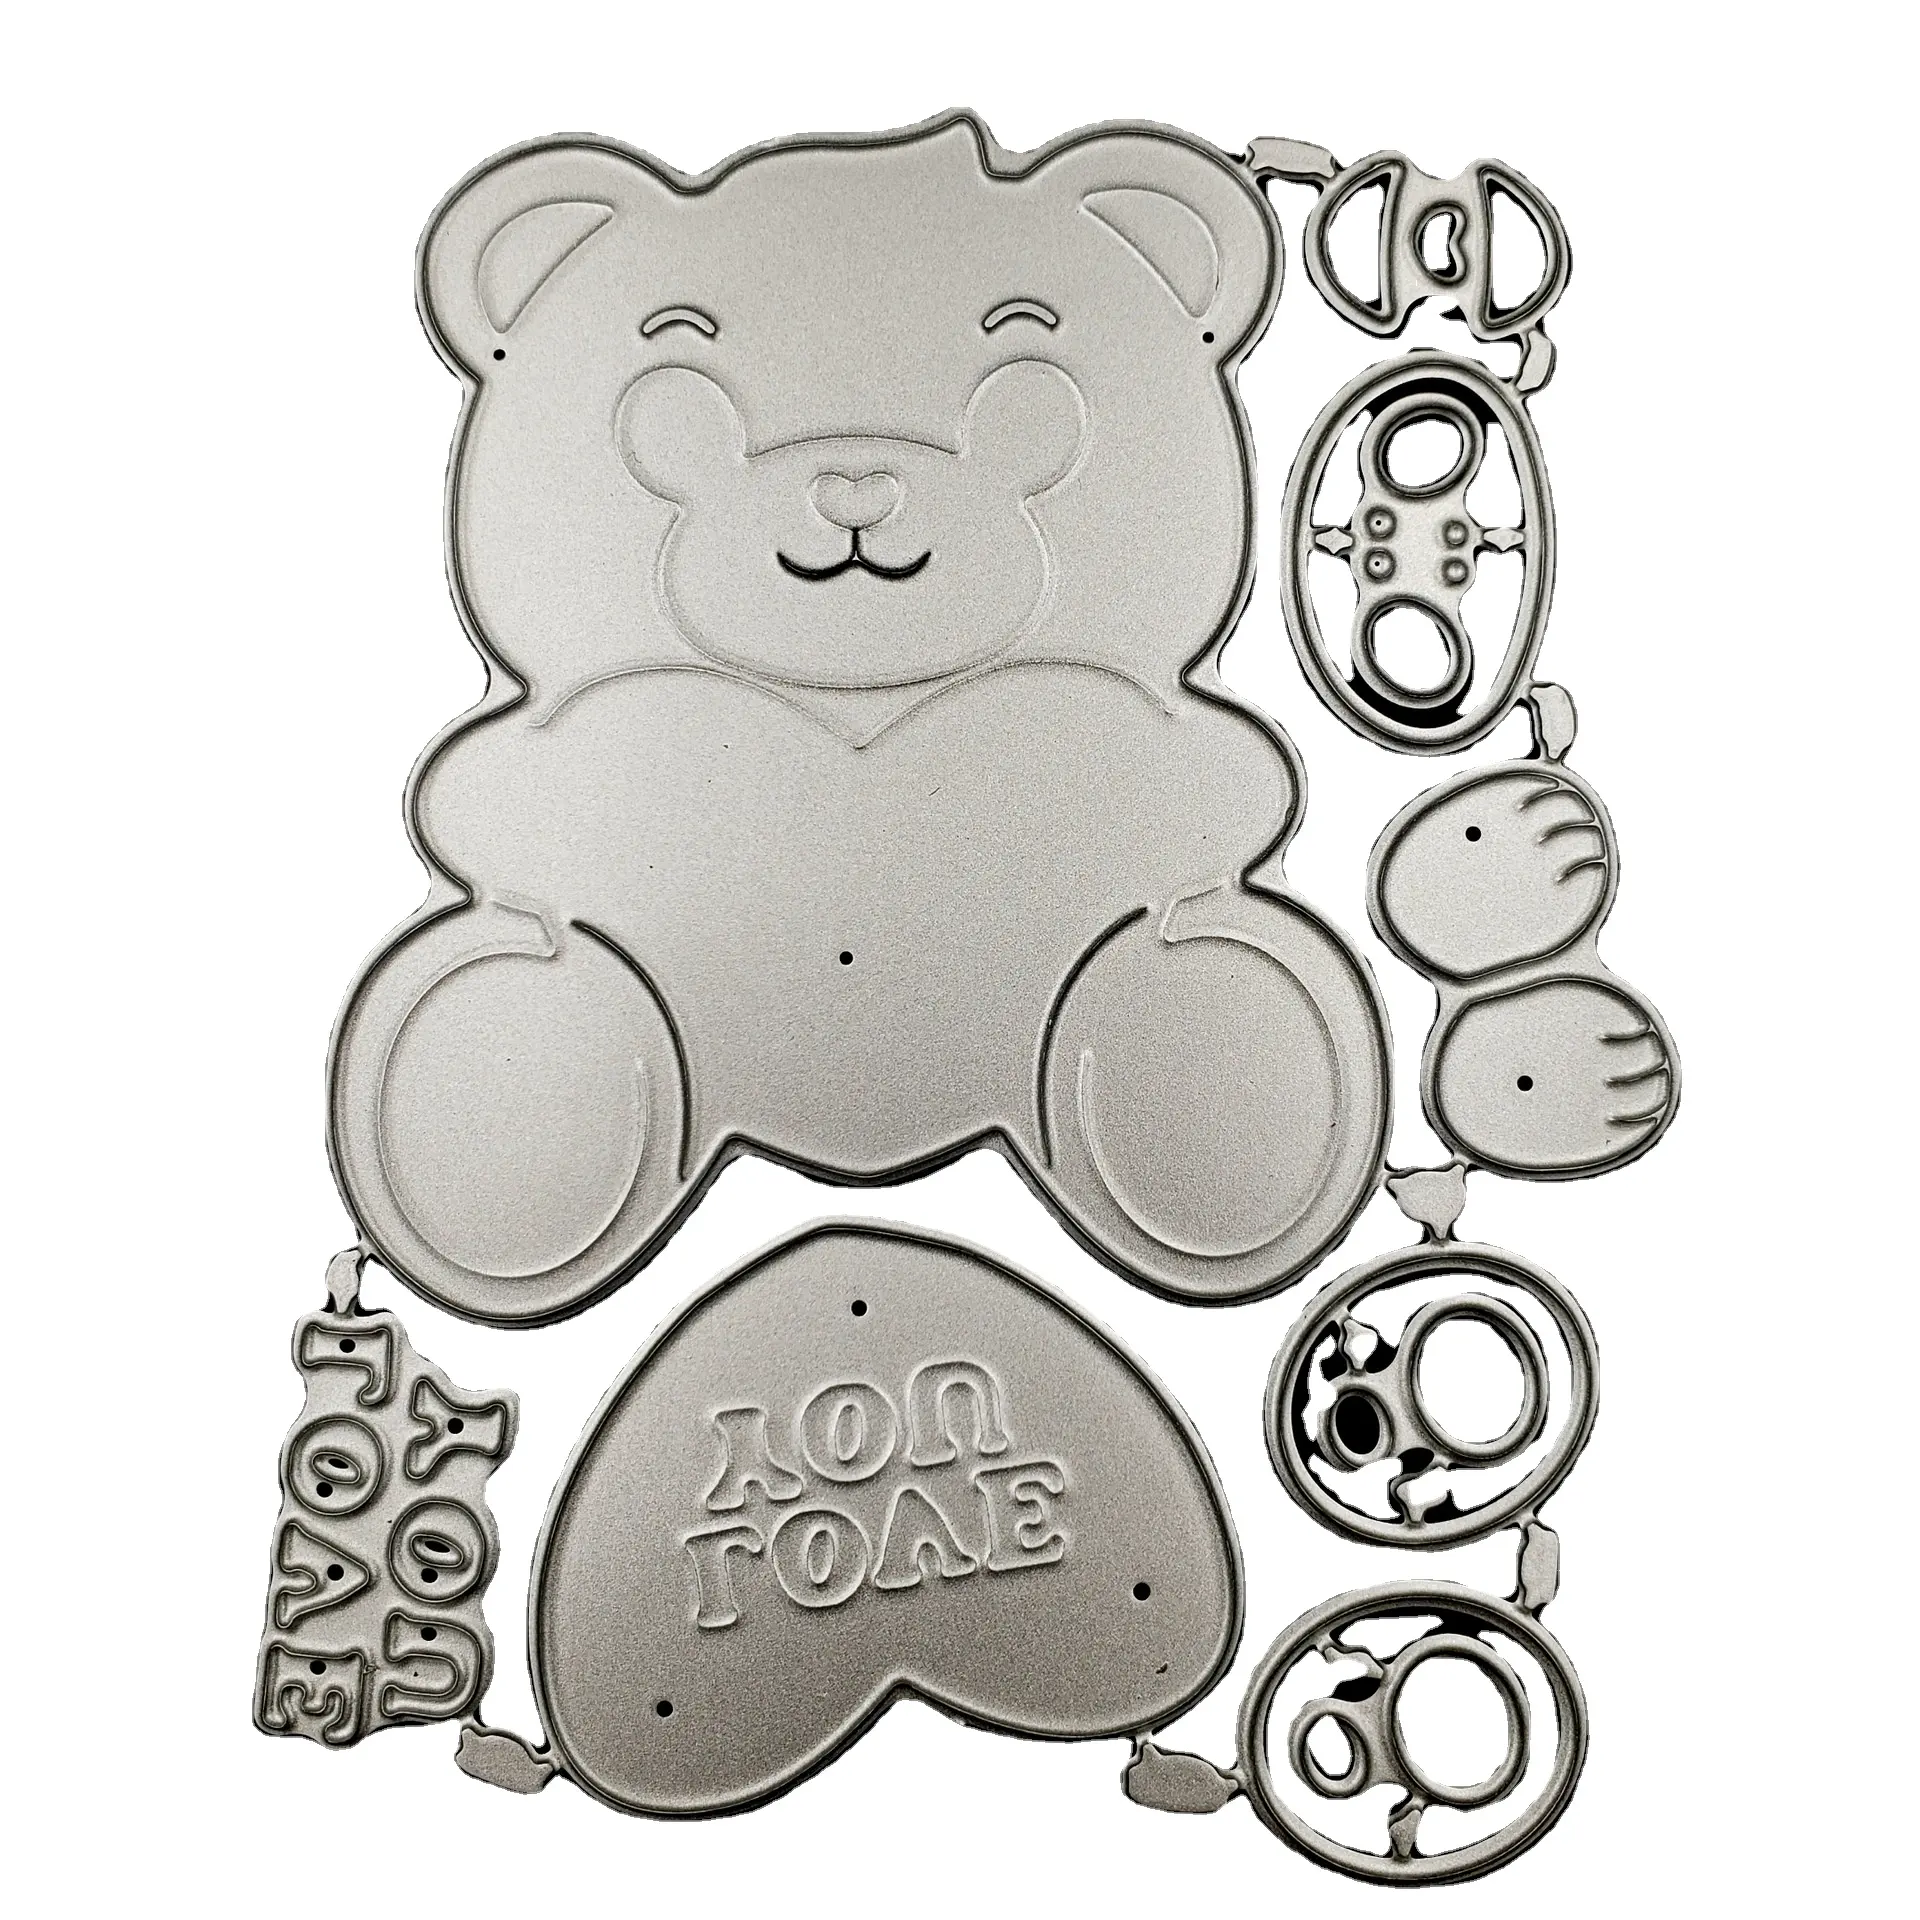 Kerajinan Logam Pembuat Kartu Ucapan Diy Pola Kustom Buatan Tangan Anak-anak Bentuk Beruang Kartun untuk Buku Tempel